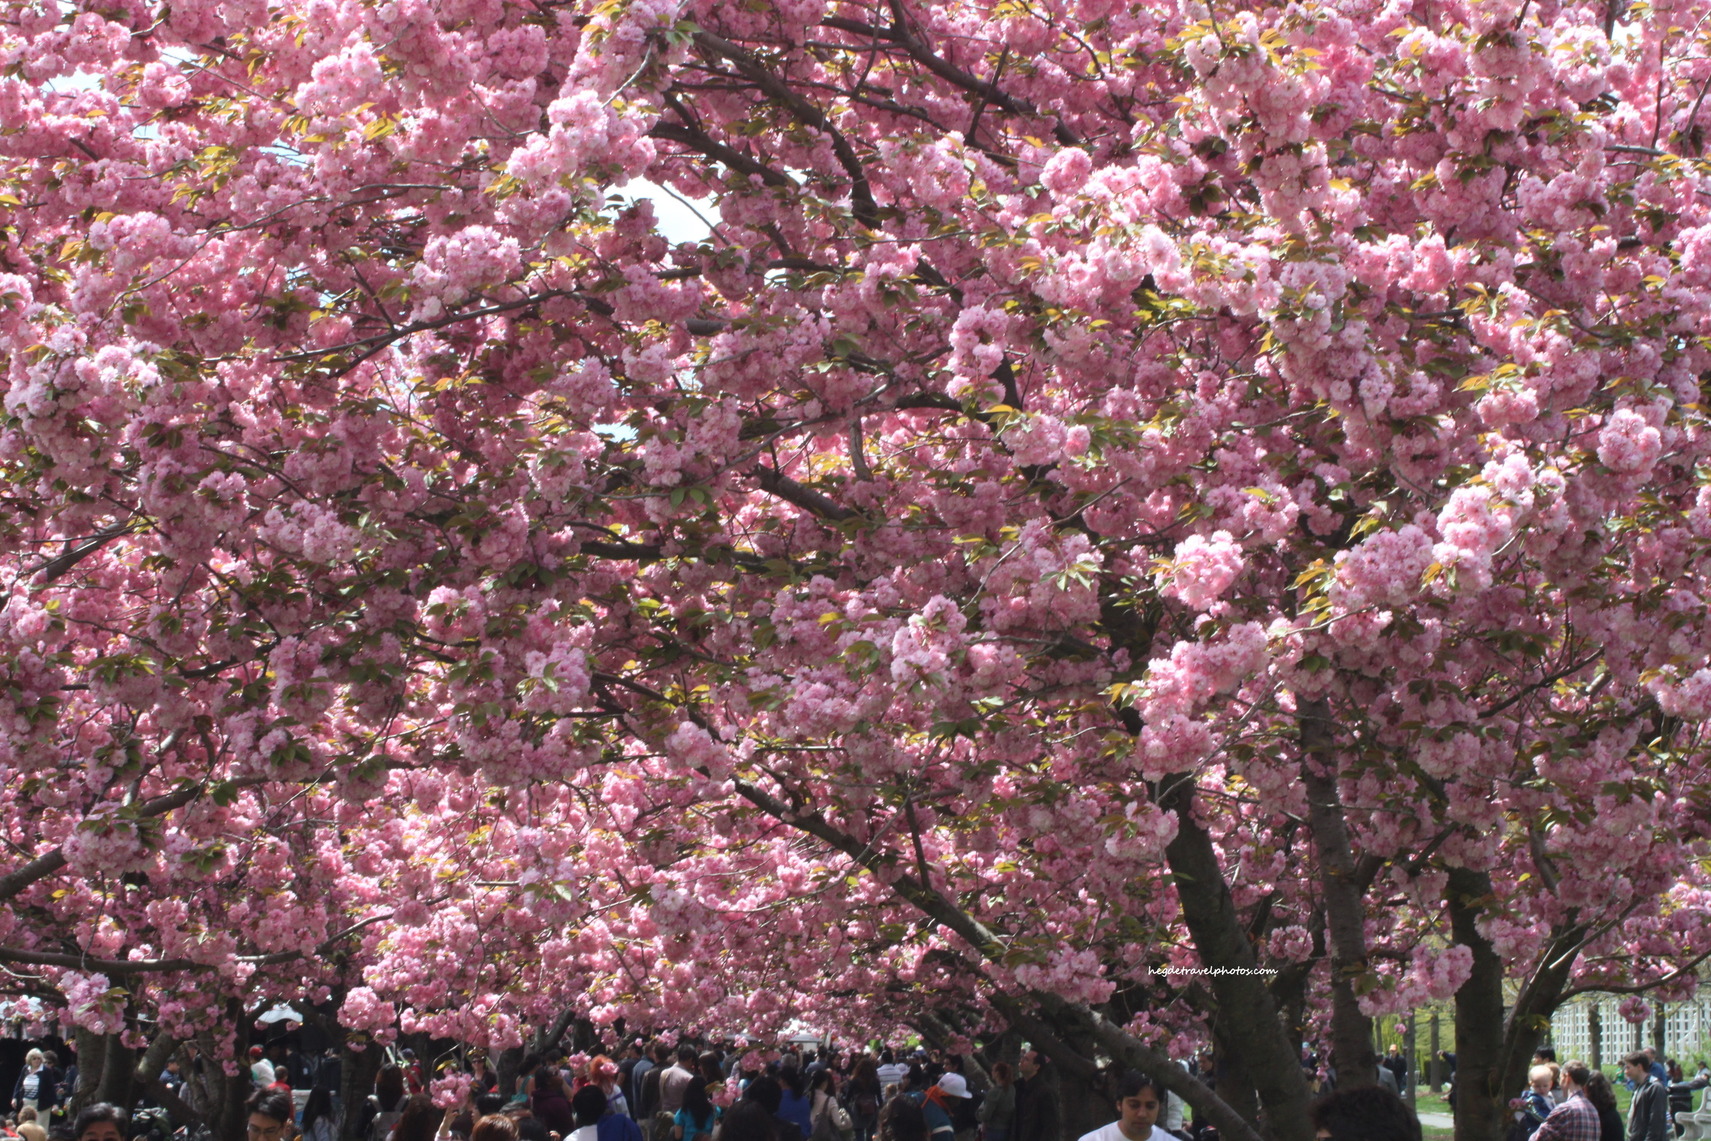 Cherry Blossom Brooklyn Botanic Garden